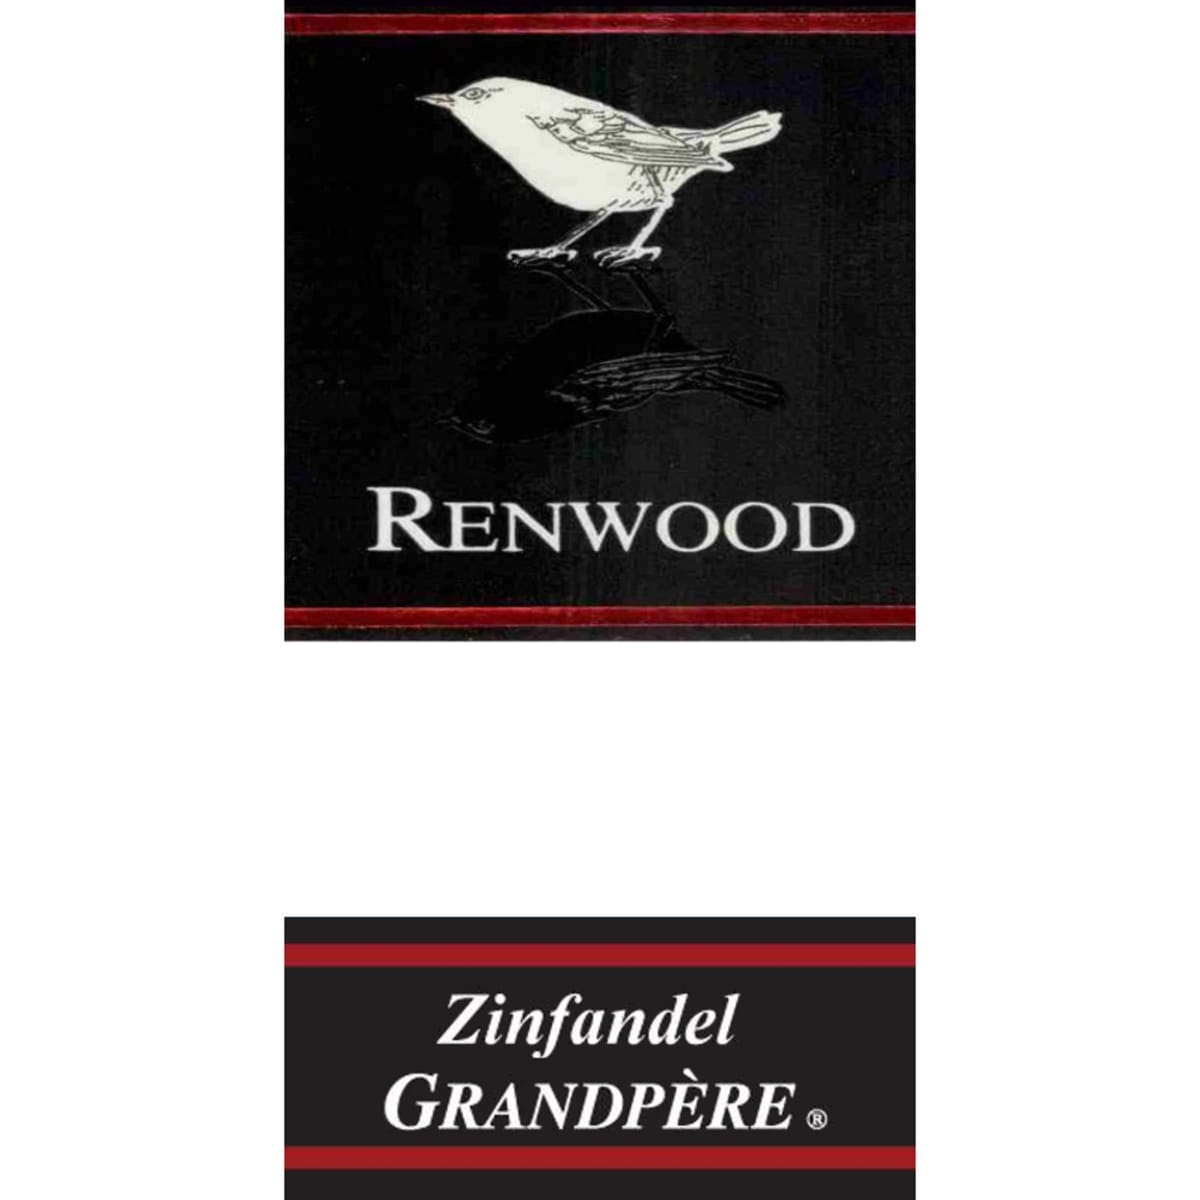 Renwood Grandpere Zinfandel 2006 Front Label